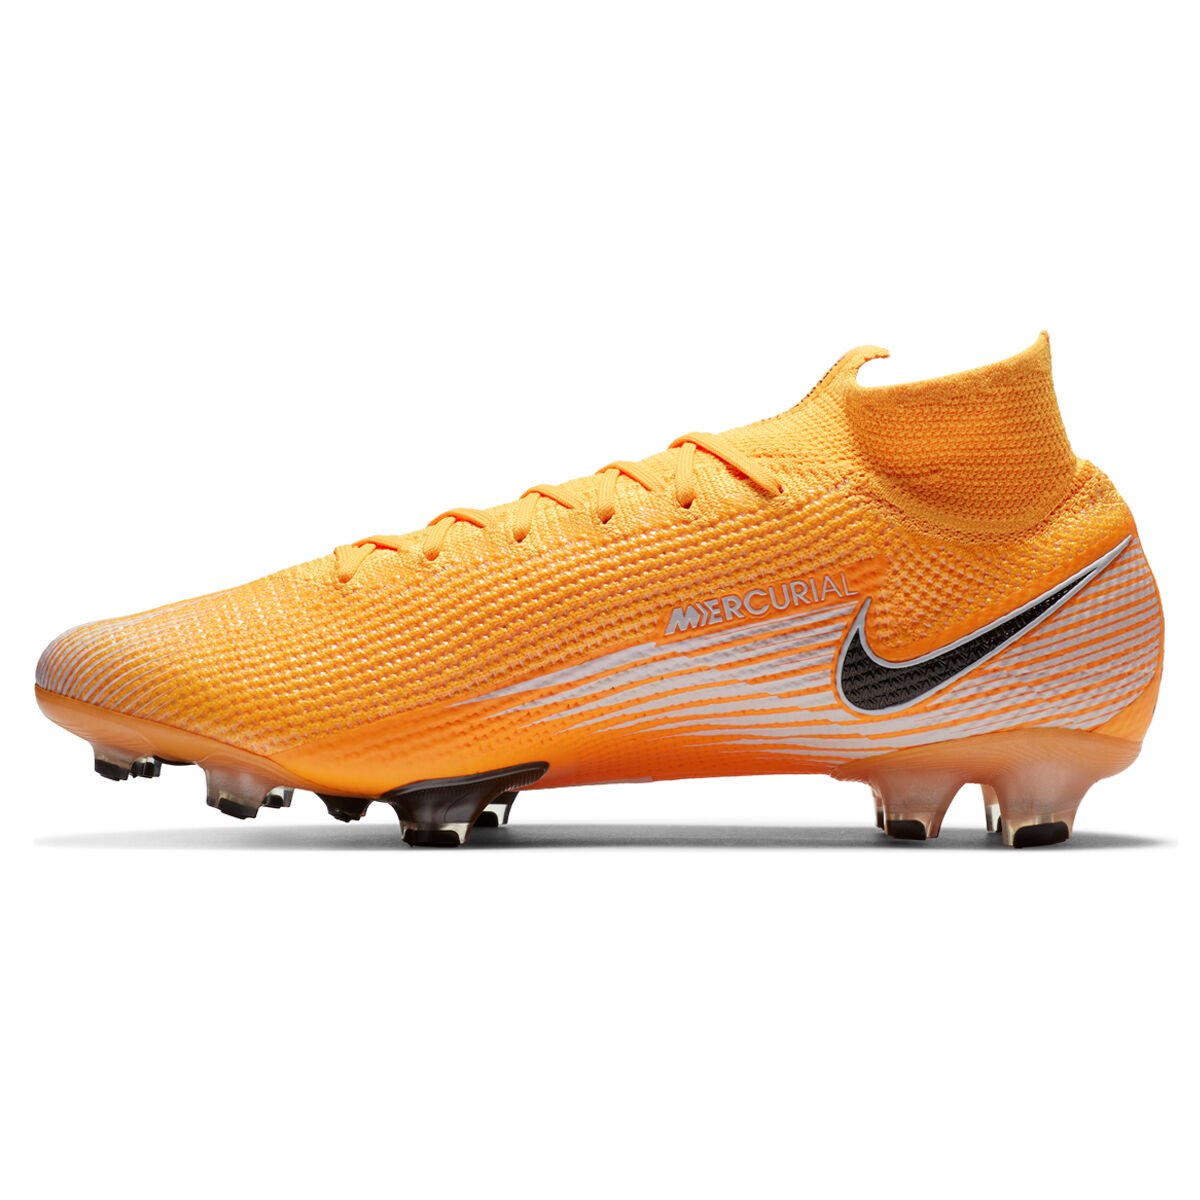 nike orange and white football boots